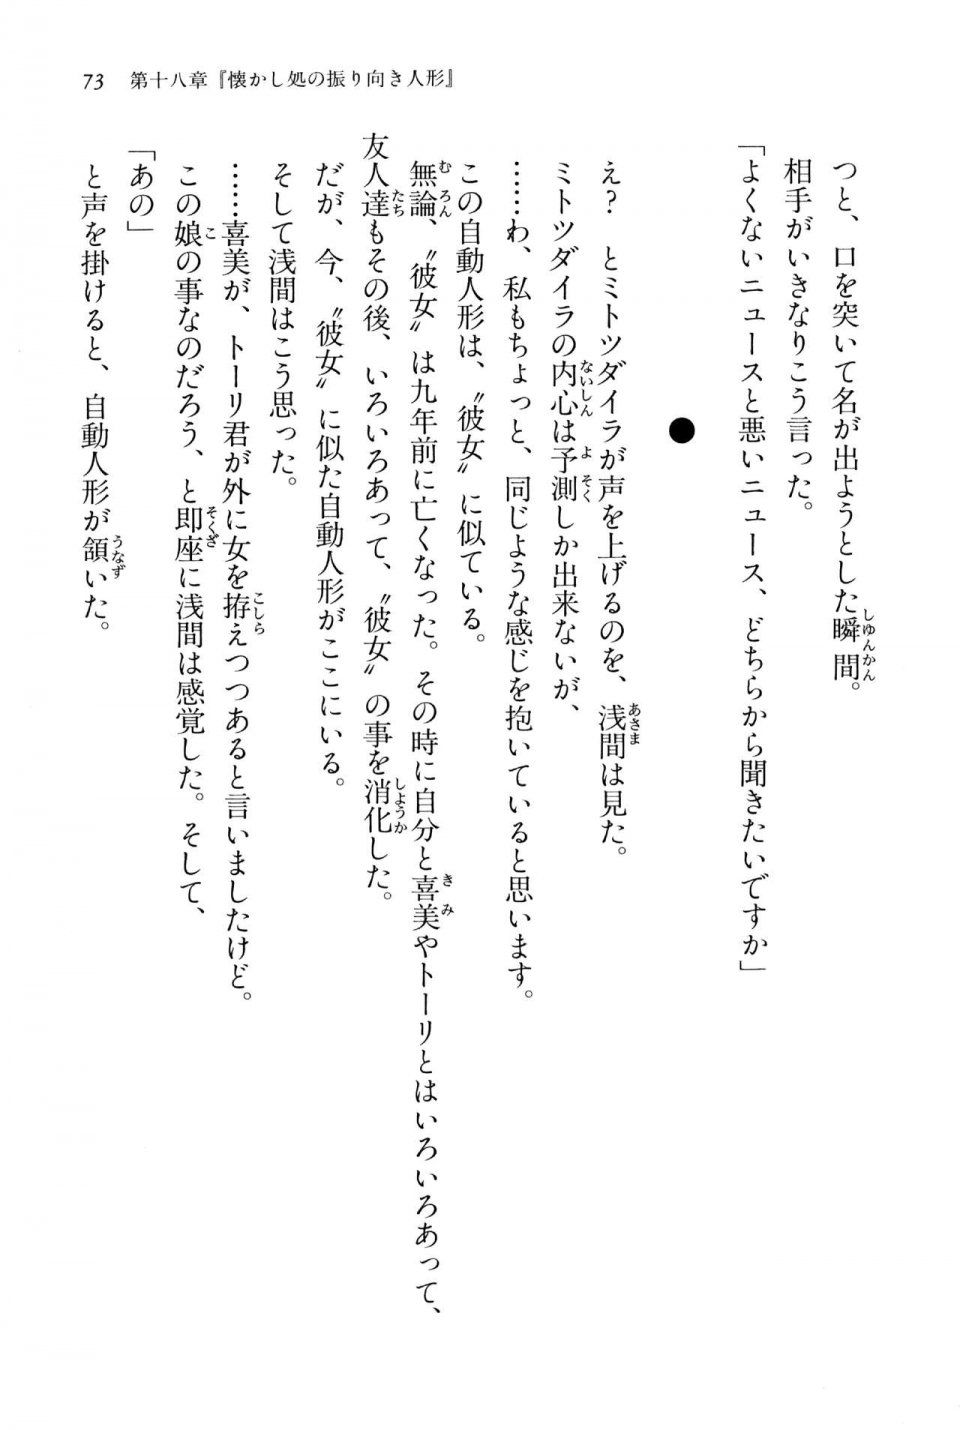 Kyoukai Senjou no Horizon BD Special Mininovel Vol 4(2B) - Photo #77